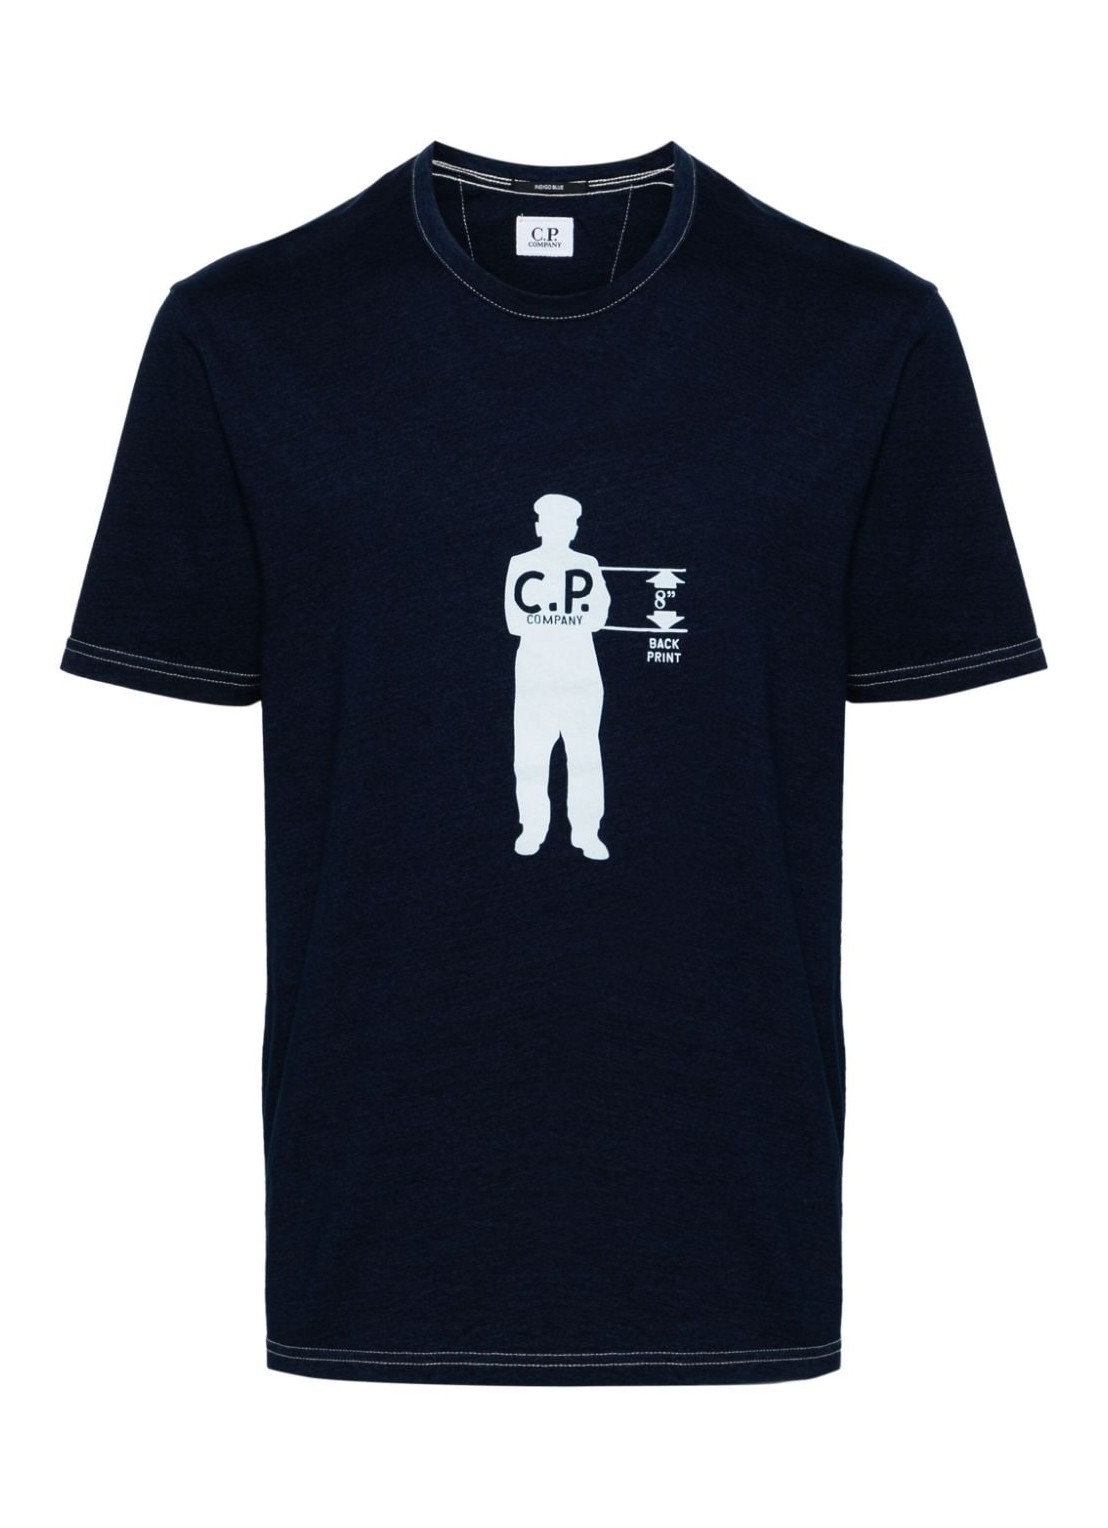 Camiseta c.p.company t-shirt manindigo jersey t-shirt - 16cmts171a110056w d11 talla M
 